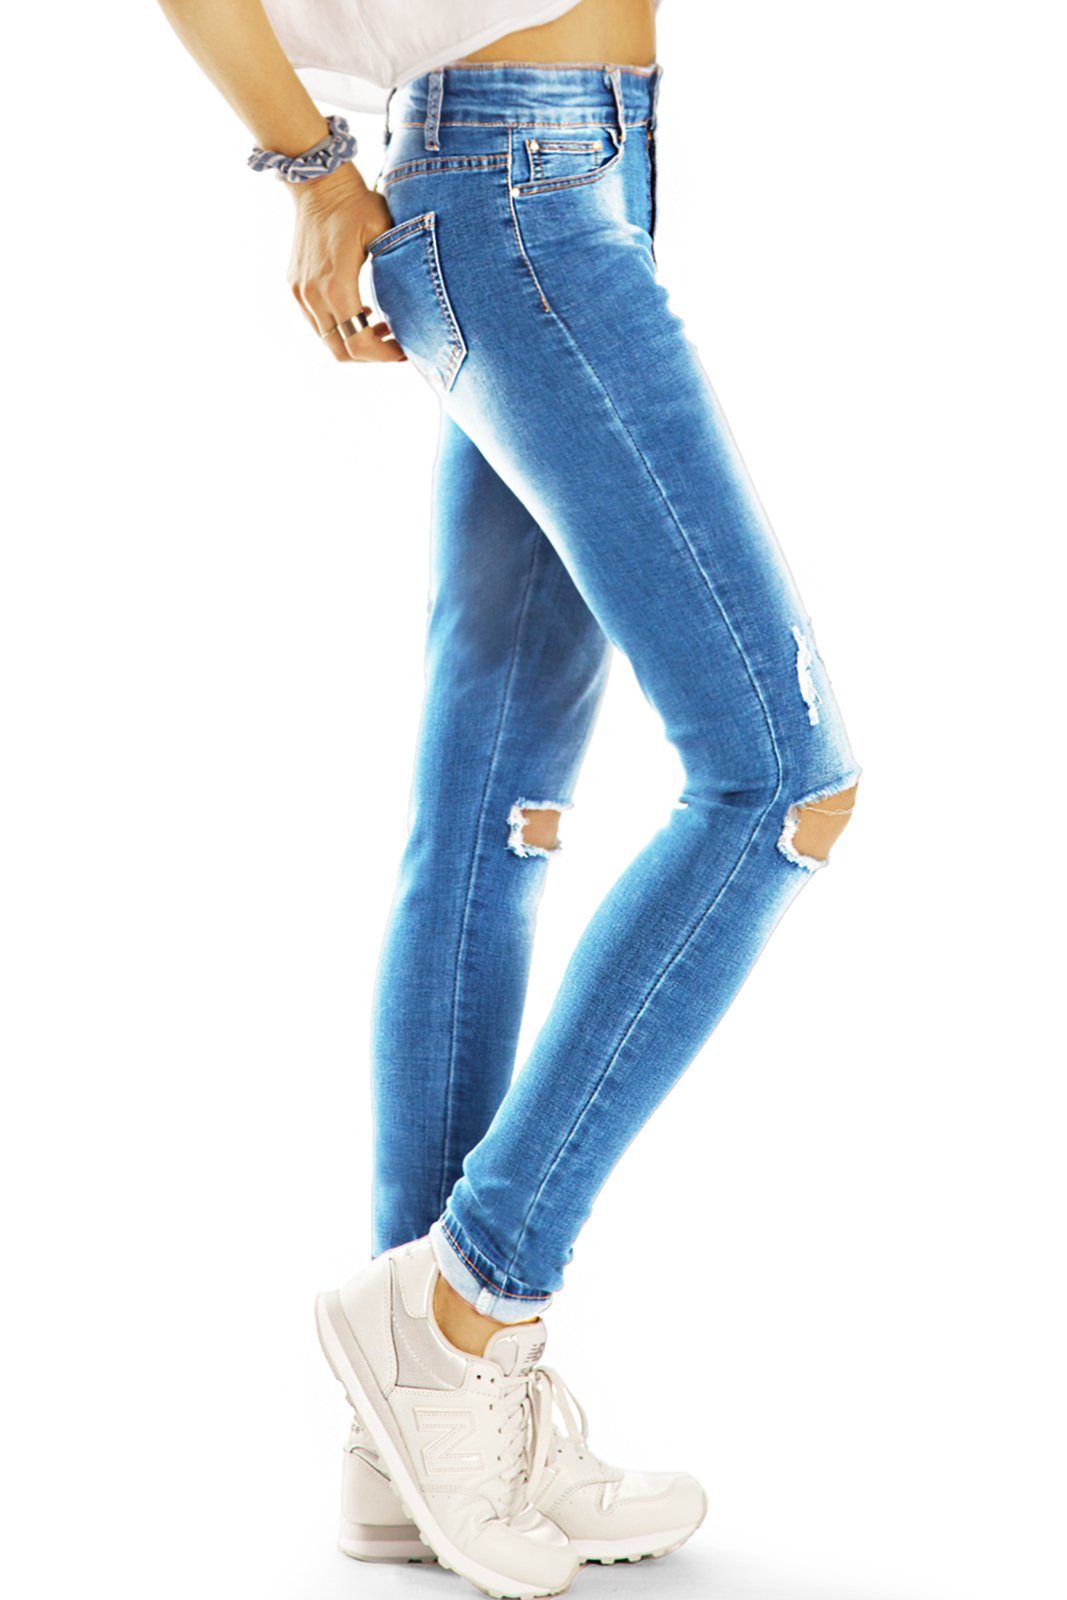 styled Destroyed-Jeans - Hosen be Stretch-Anteil Waist Medium - destroyed Damen j9e-1 5-Pocket-Style, Skinnyjeans Röhrenjeans mit